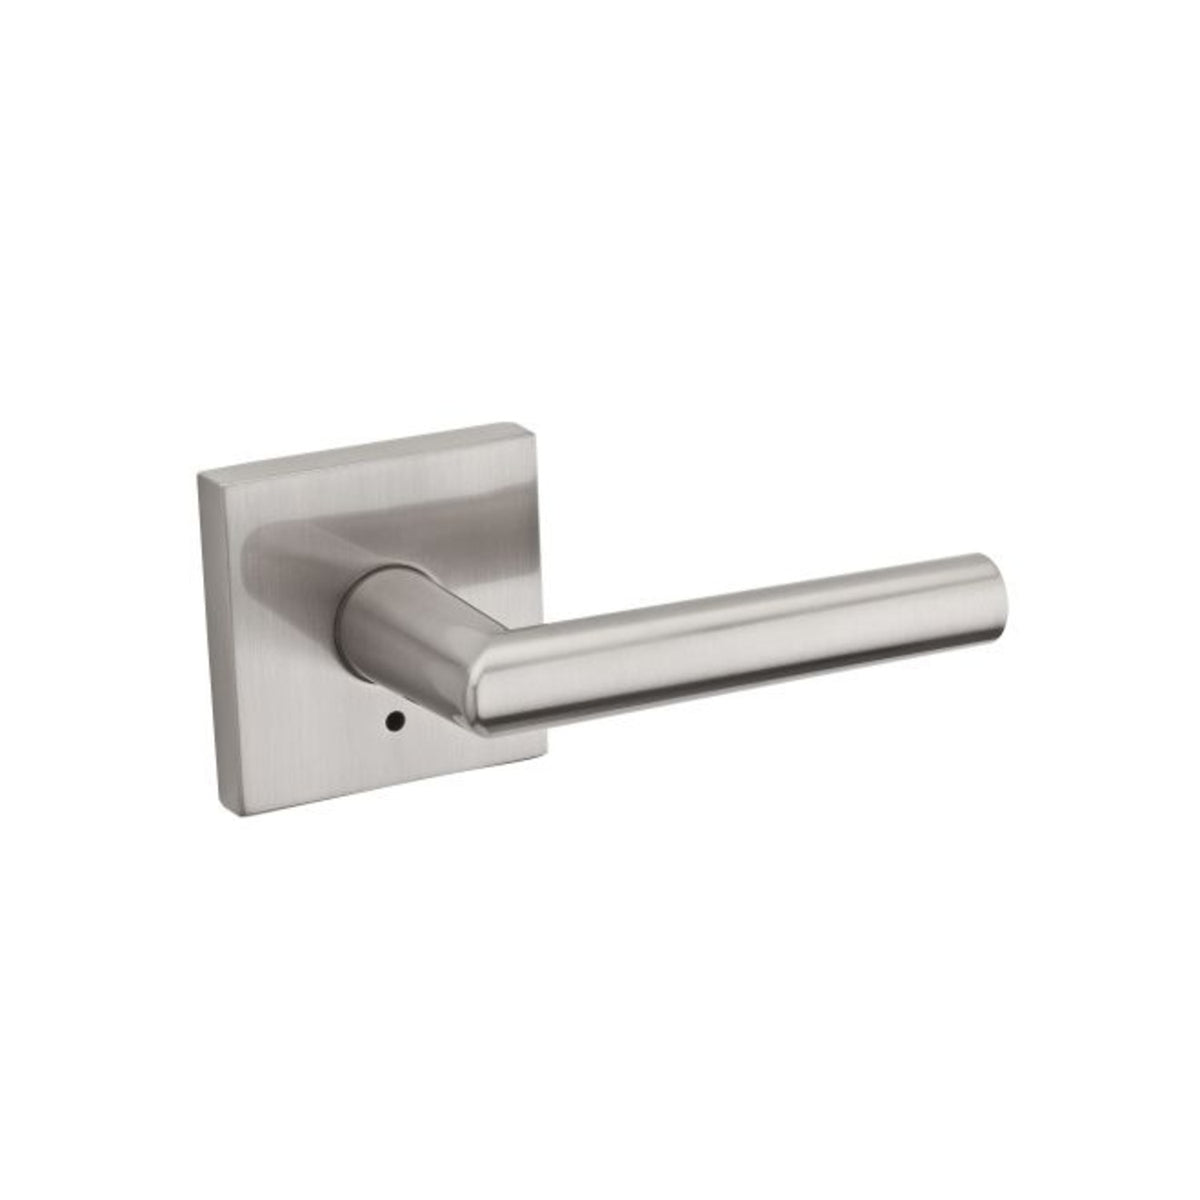 Weiser Lock SPVL331MILSQT15 Milan With Square Rose Privacy Door Lock, Satin Nickel